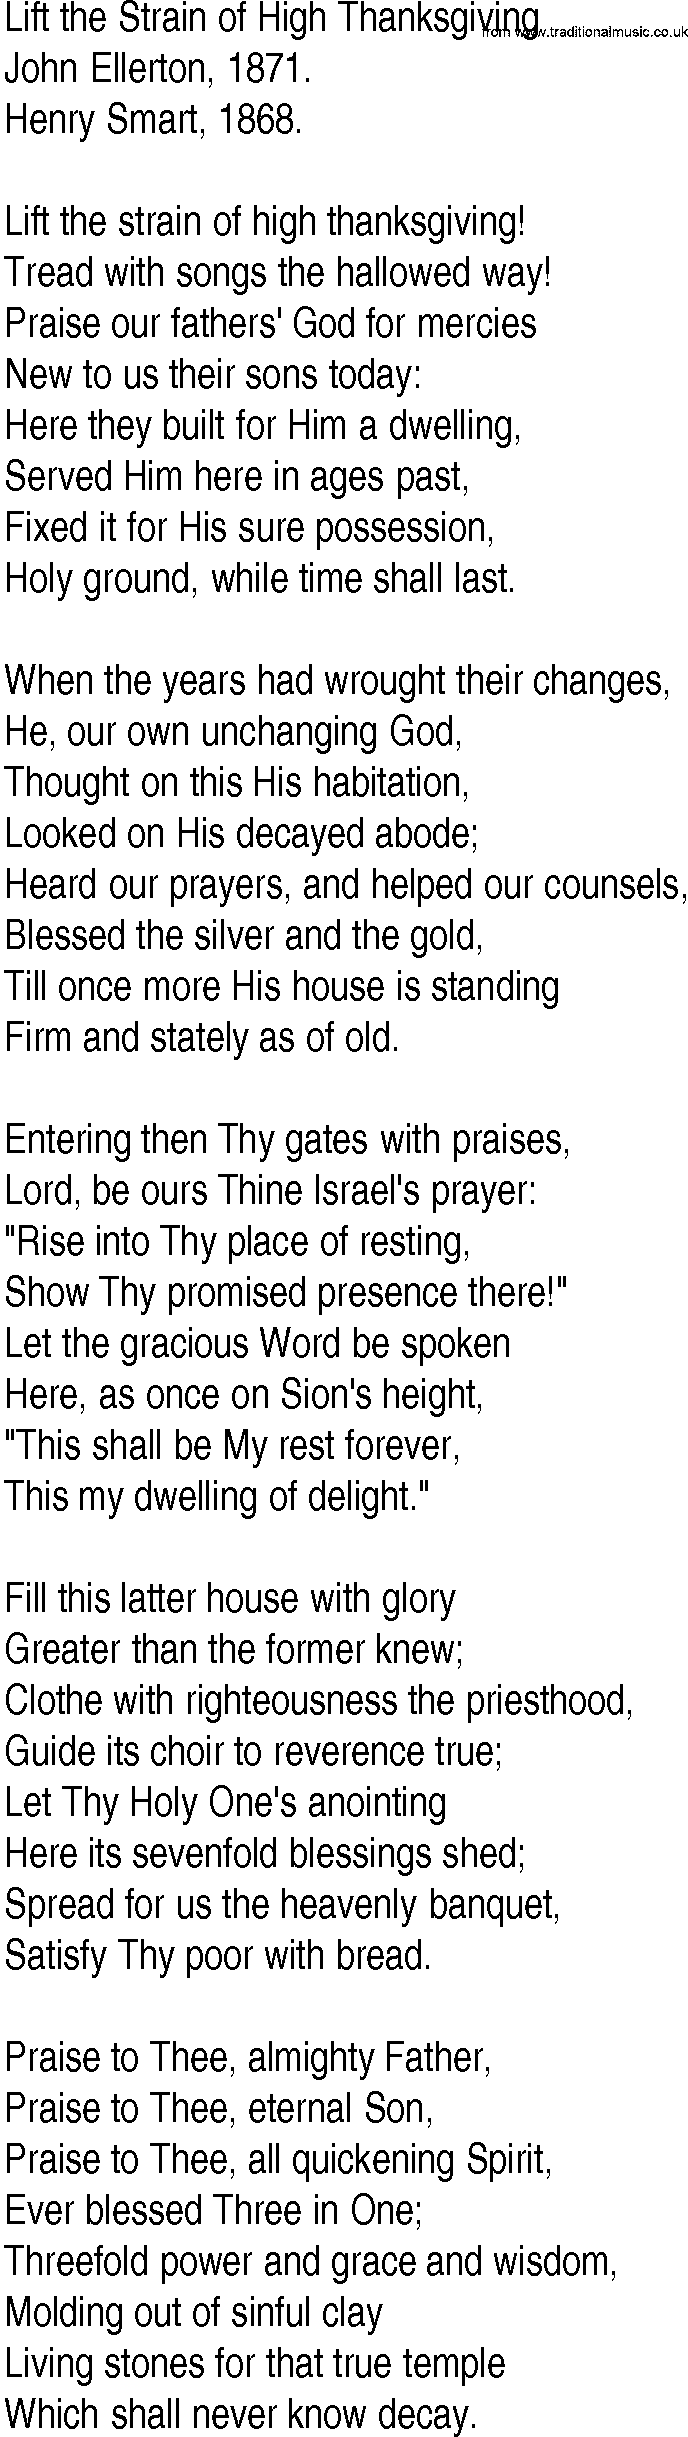 Hymn and Gospel Song: Lift the Strain of High Thanksgiving by John Ellerton lyrics